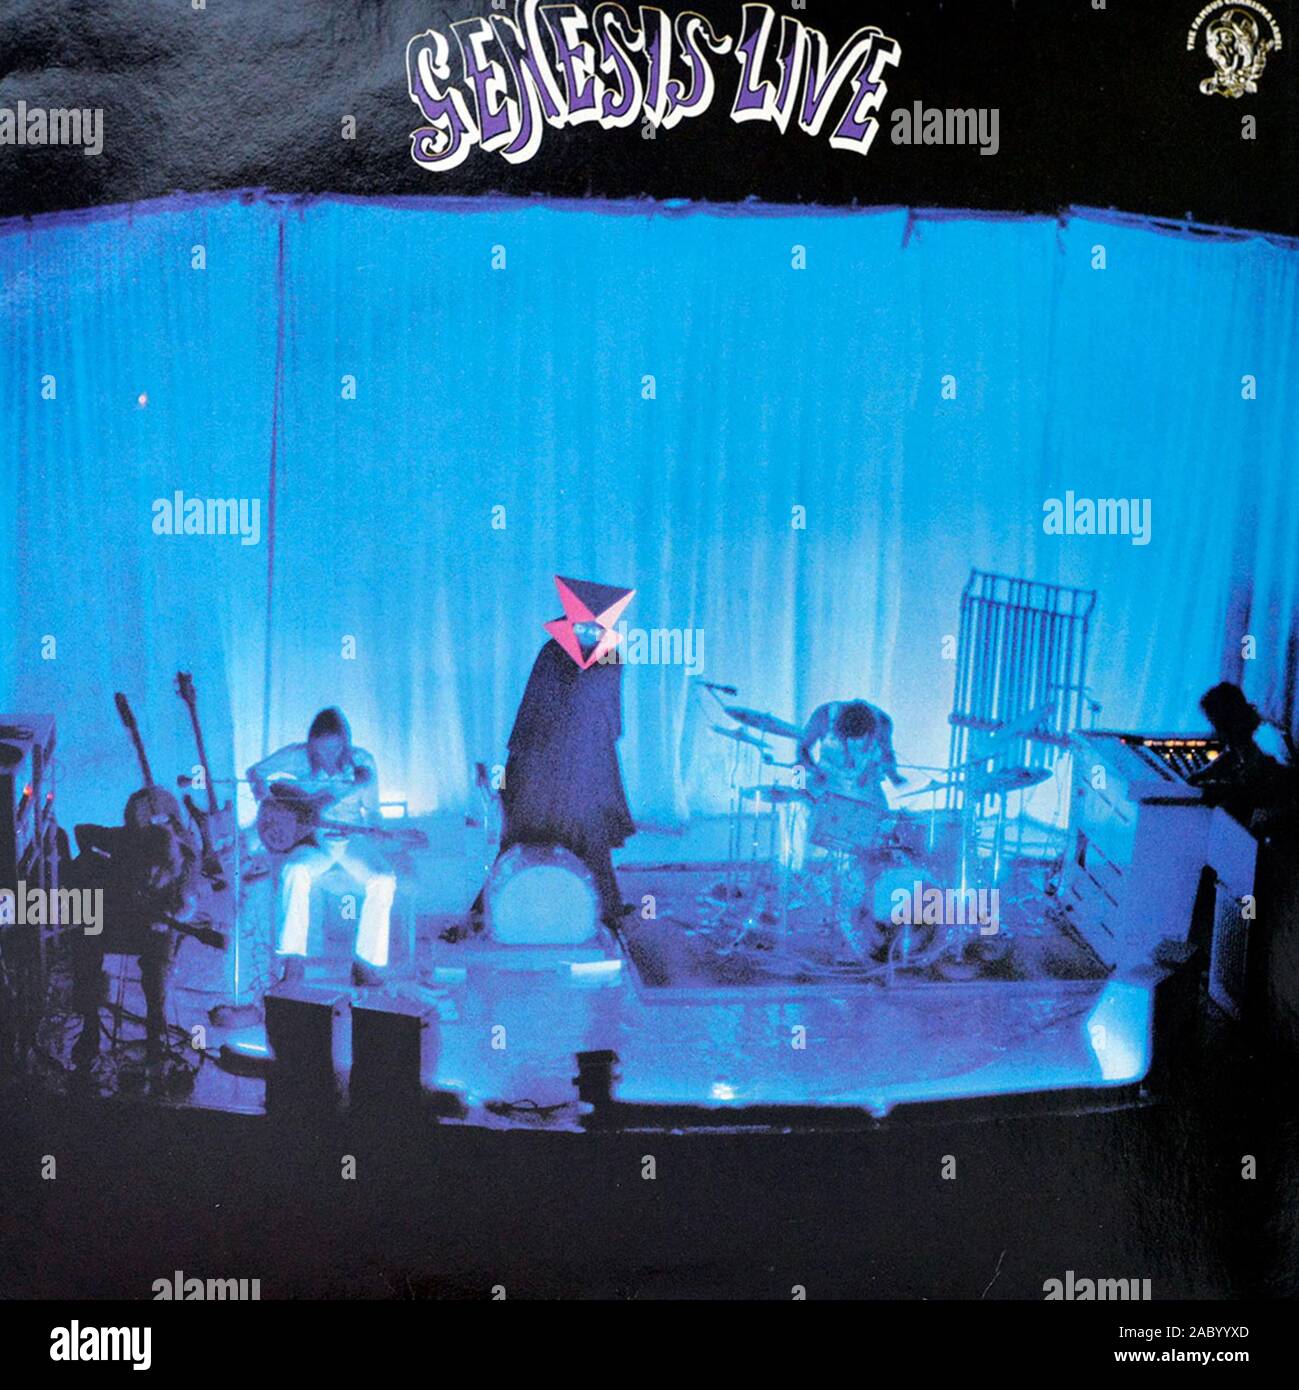 GENESIS Live - Vintage Vinyl Album Cover Stockfoto